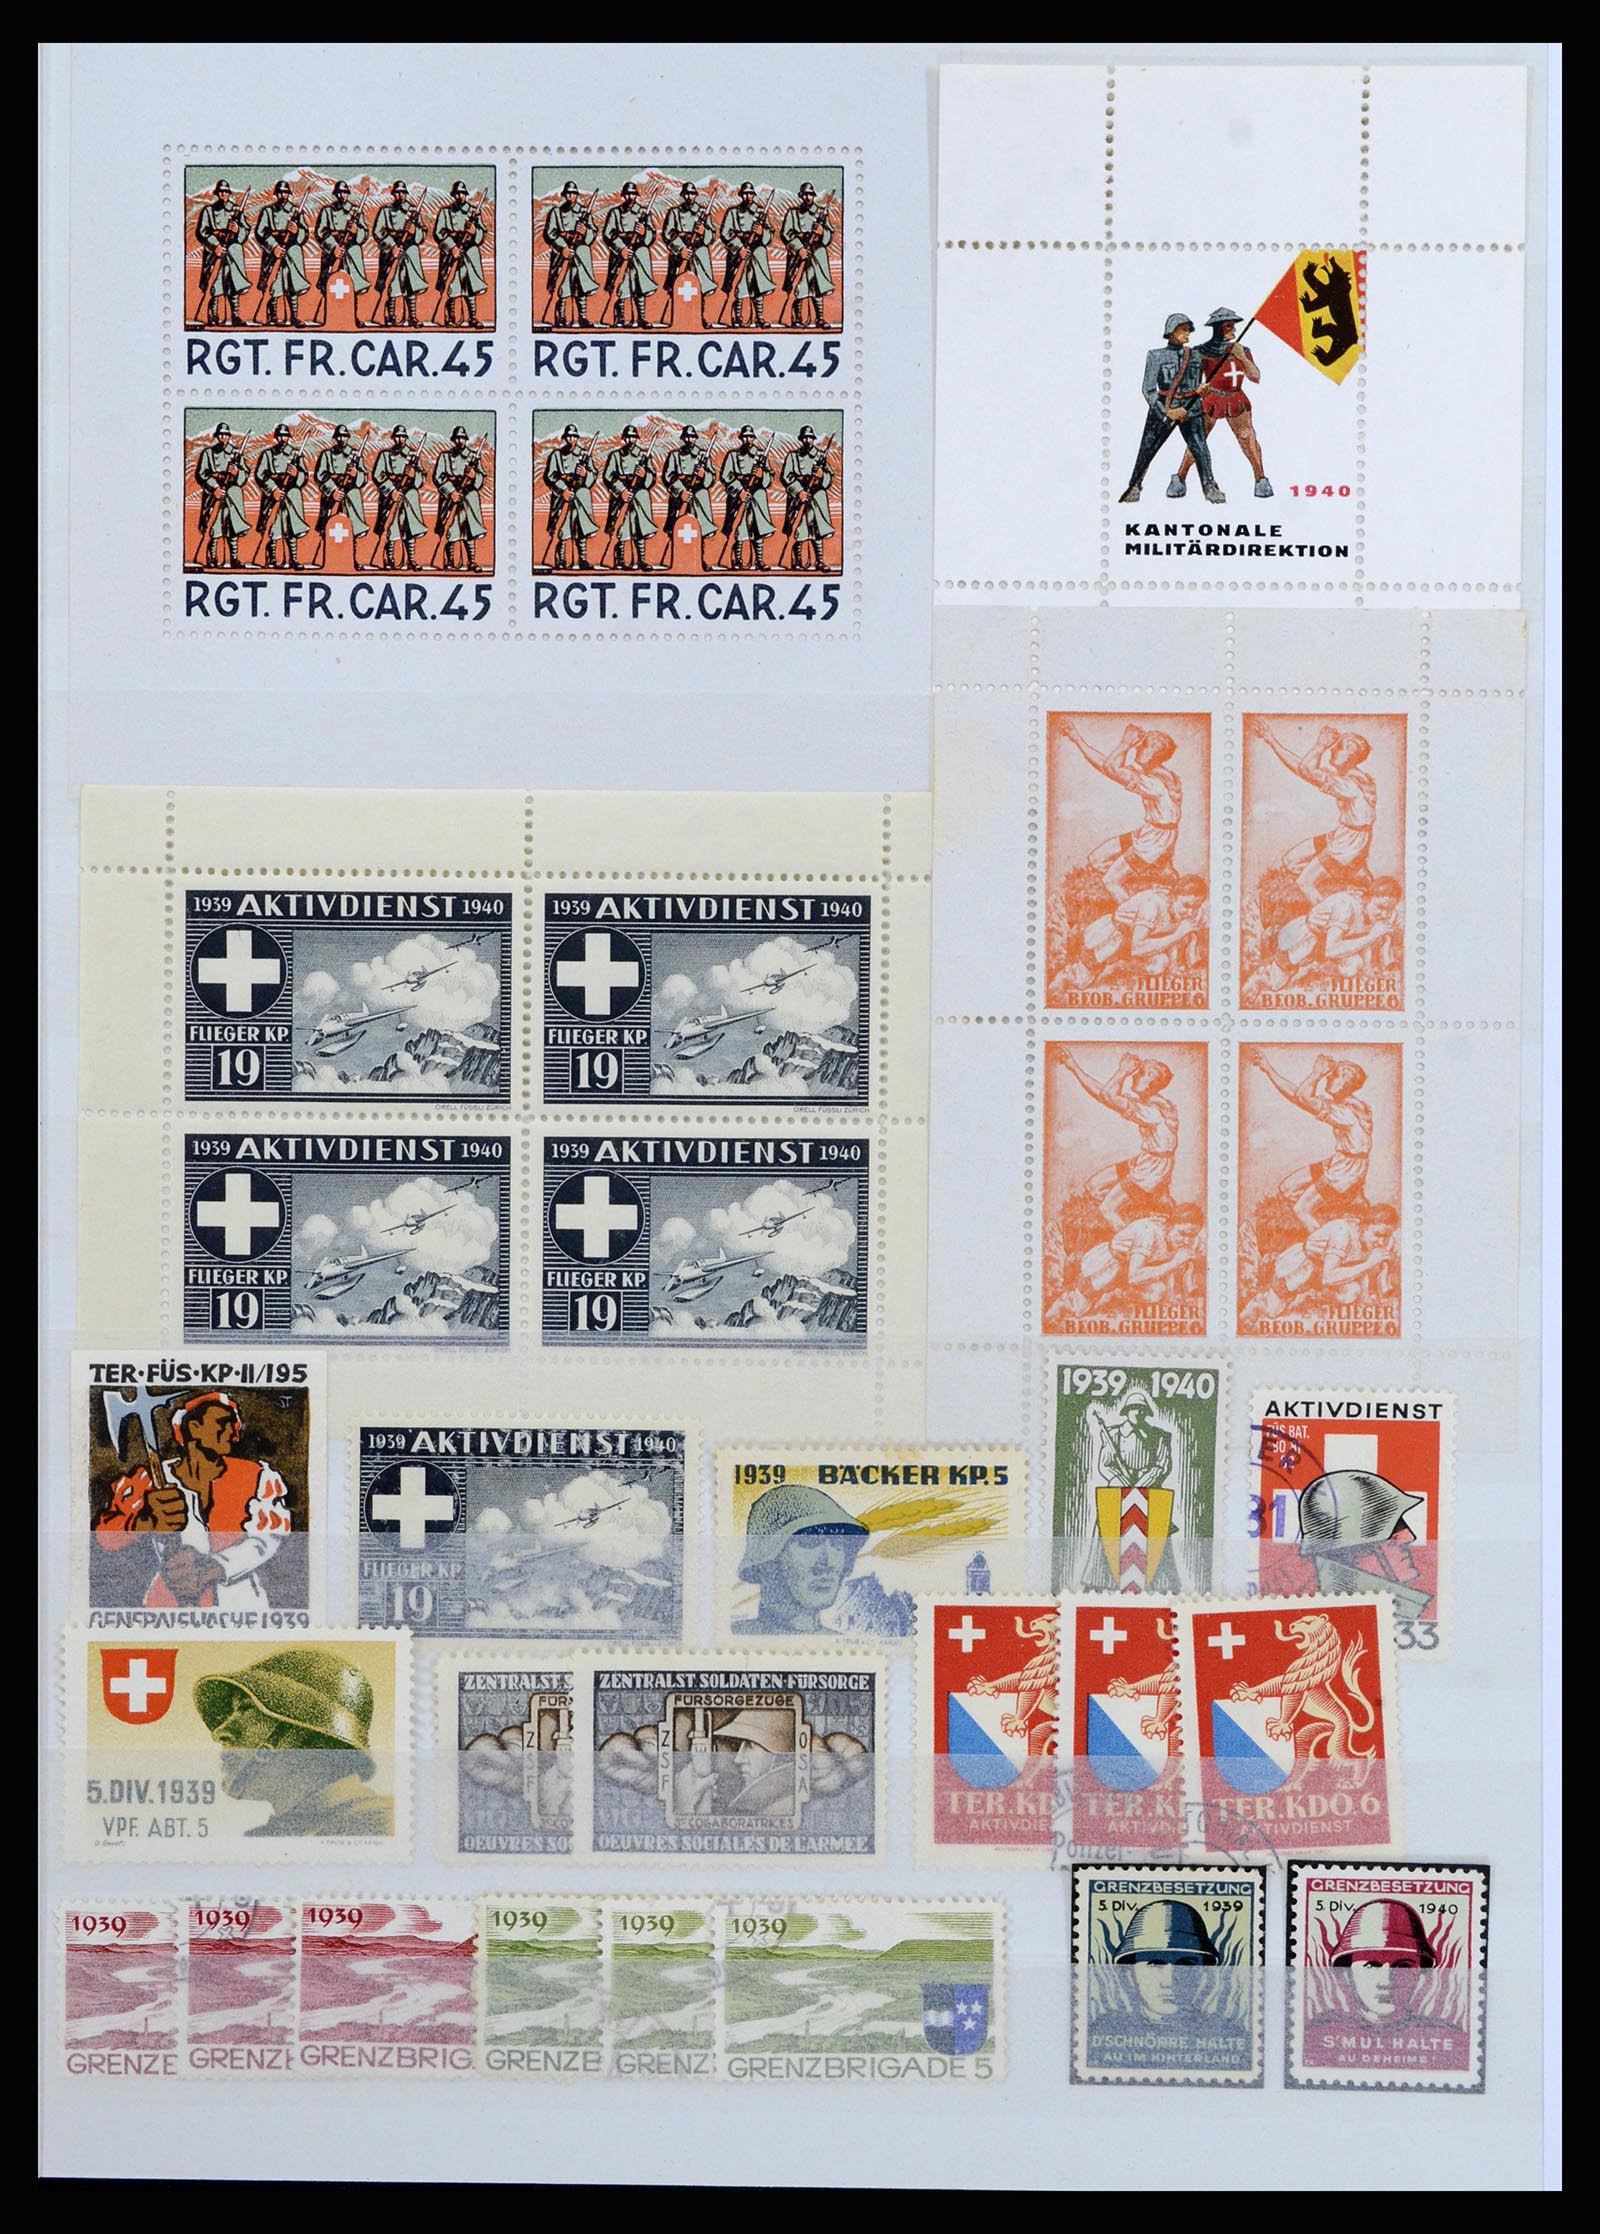 37149 005 - Stamp collection 37149 Switzerland soldier stamps 1914-1945.